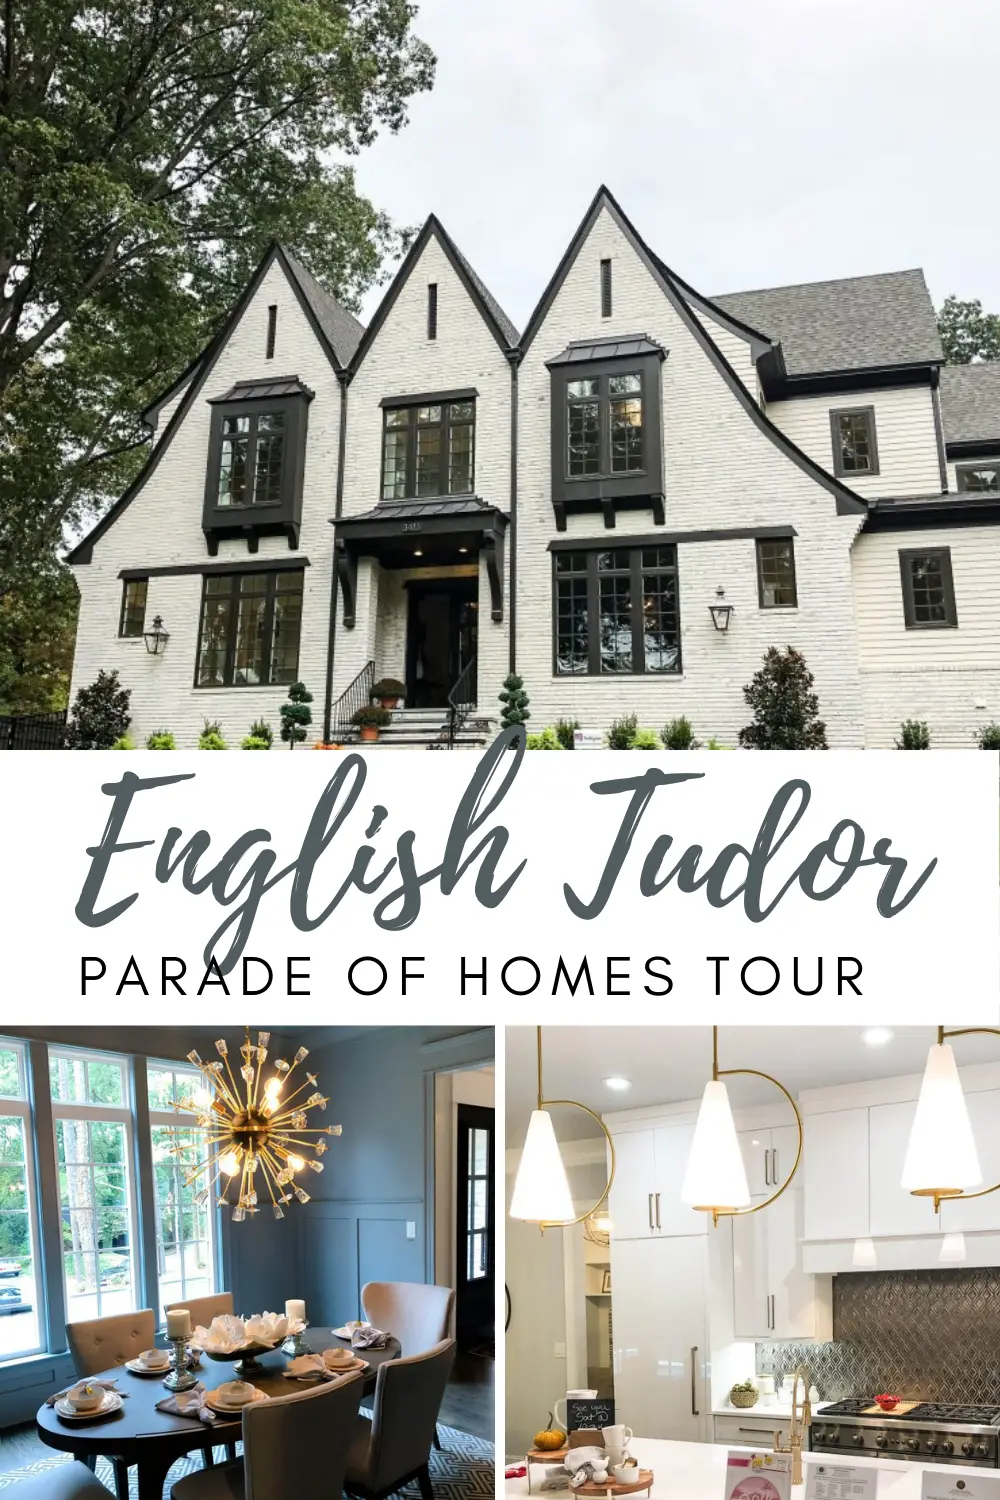 English Tudor Parade of Homes Tour full of stunning interior design ideas